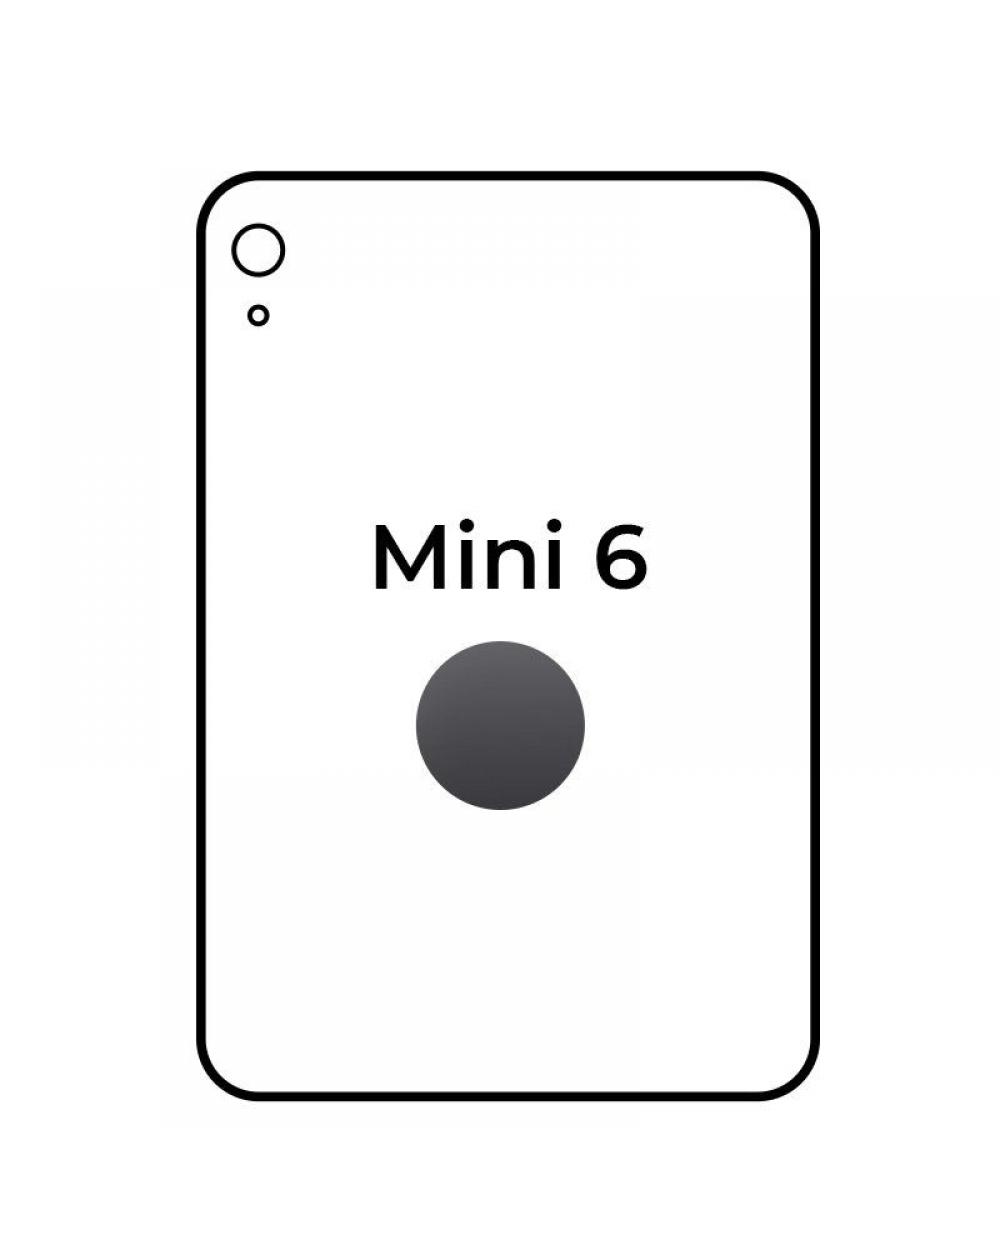 iPad Mini 8.3 2021 WiFi Cell/ A15 Bionic/ 64GB/ 5G/ Gris Espacial - MK893TY/A - Imagen 1